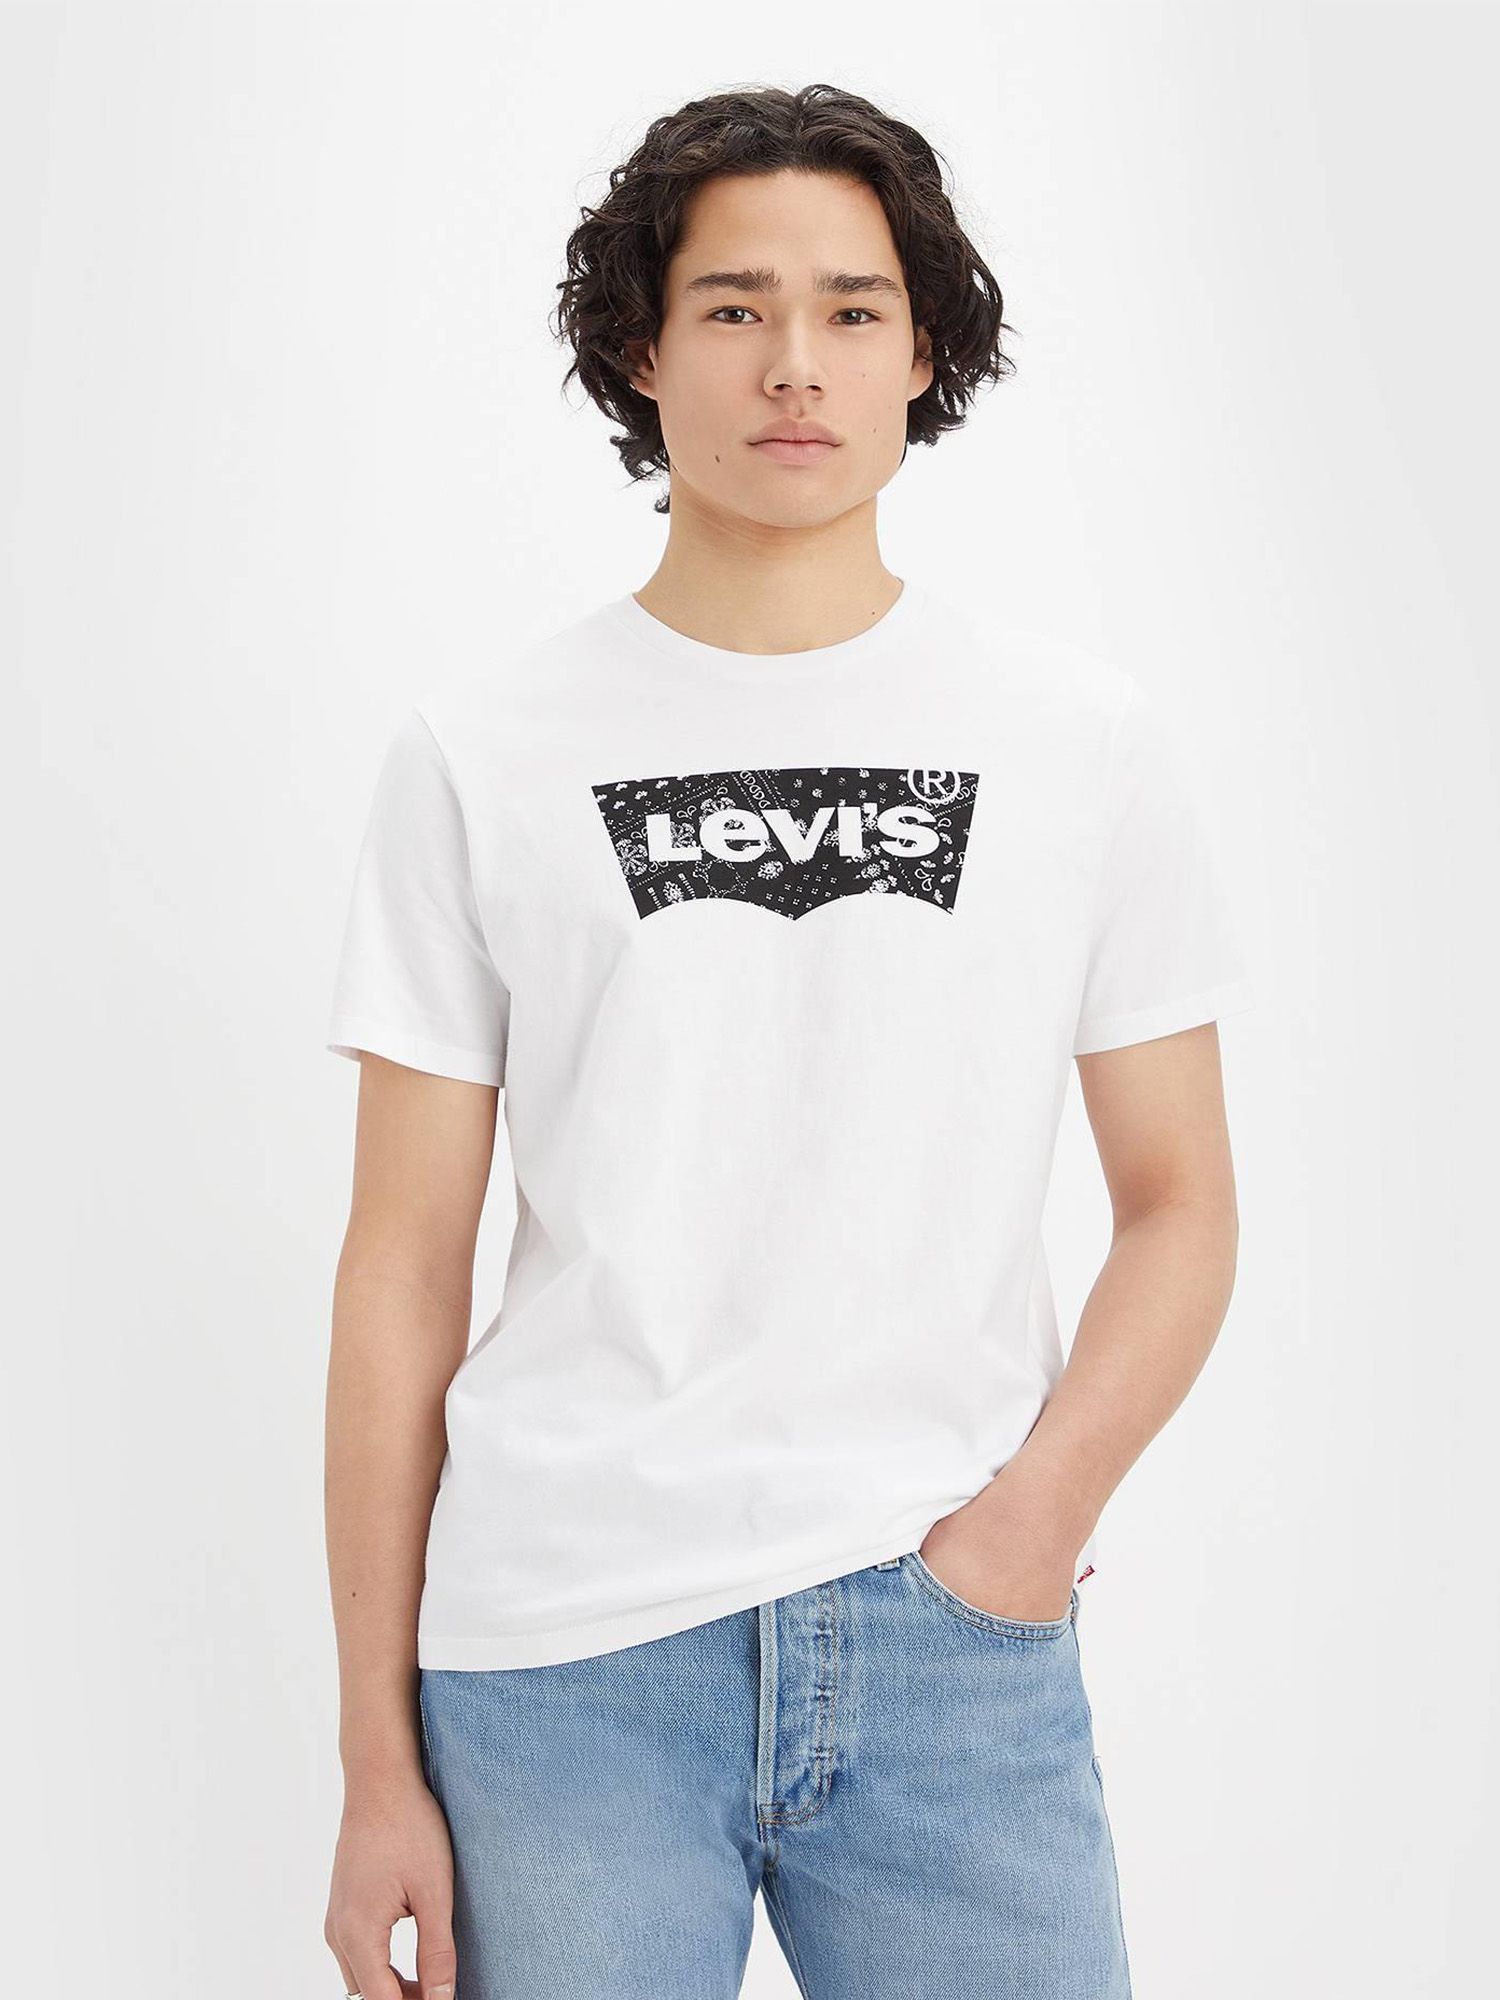 Levi's uomo t-shirt graphic 22491-1326